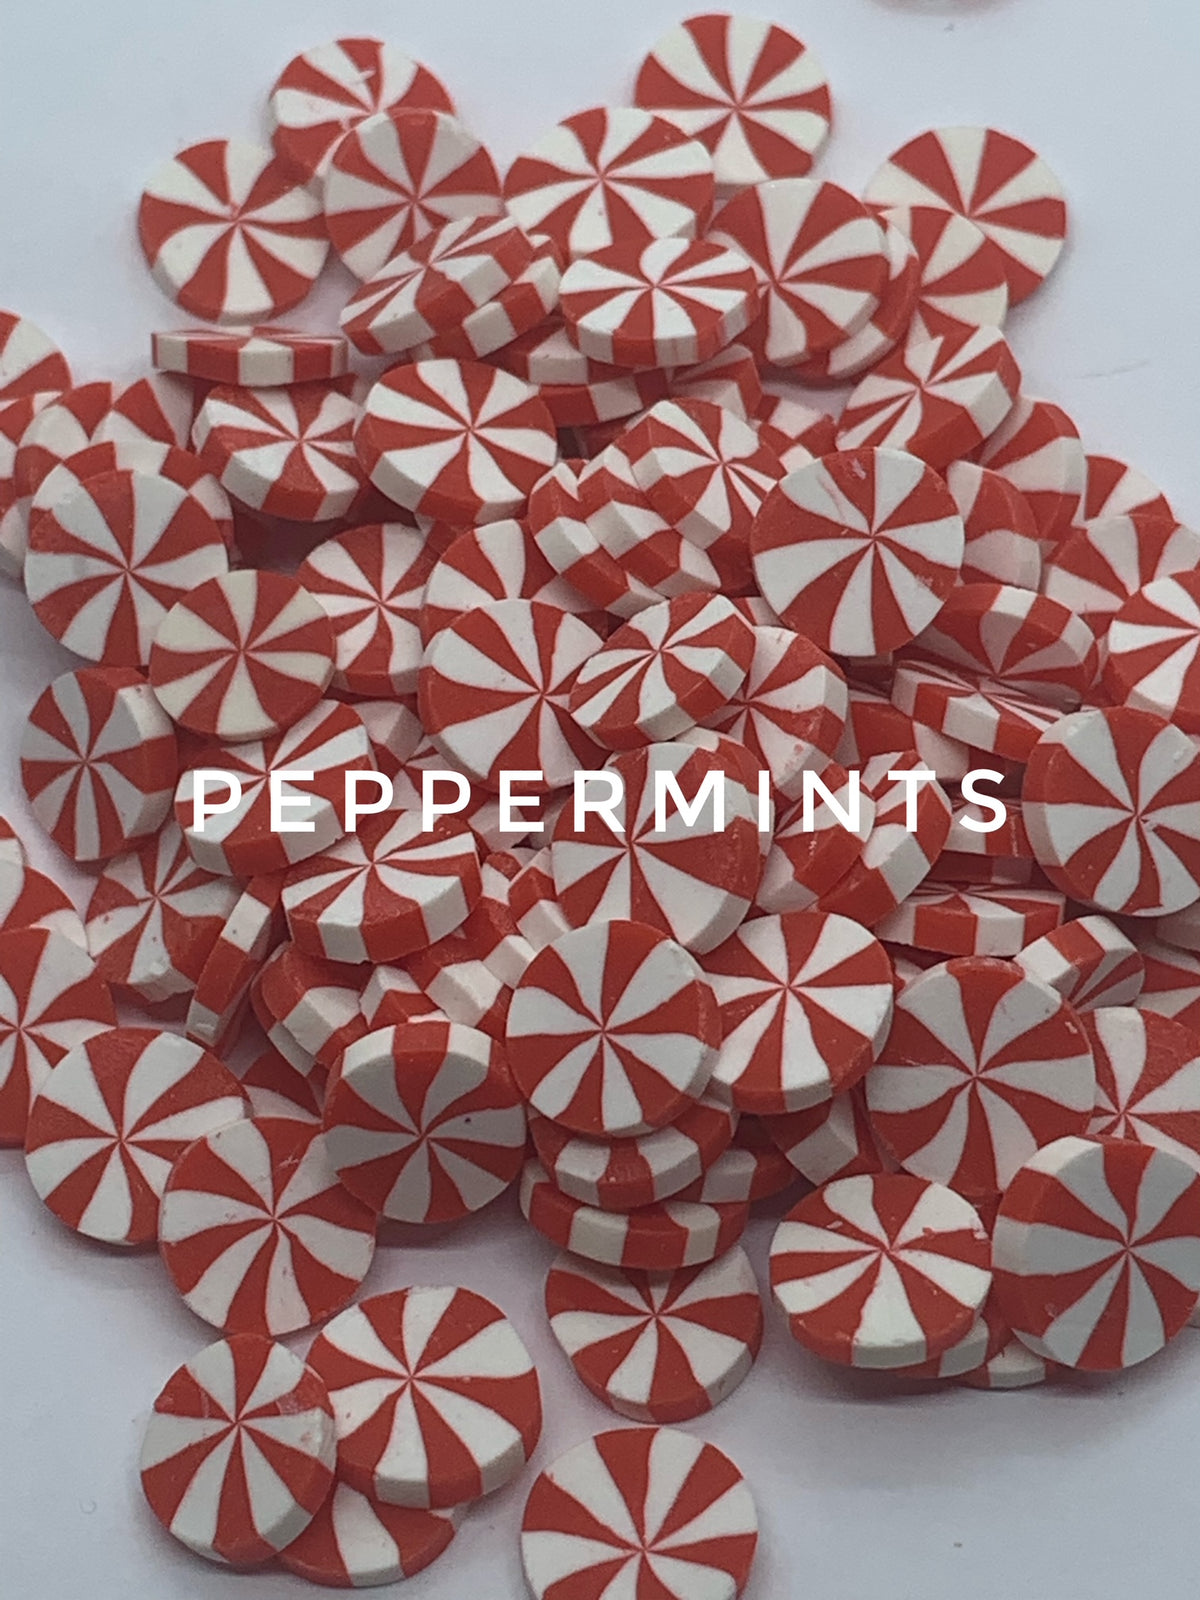 Peppermints